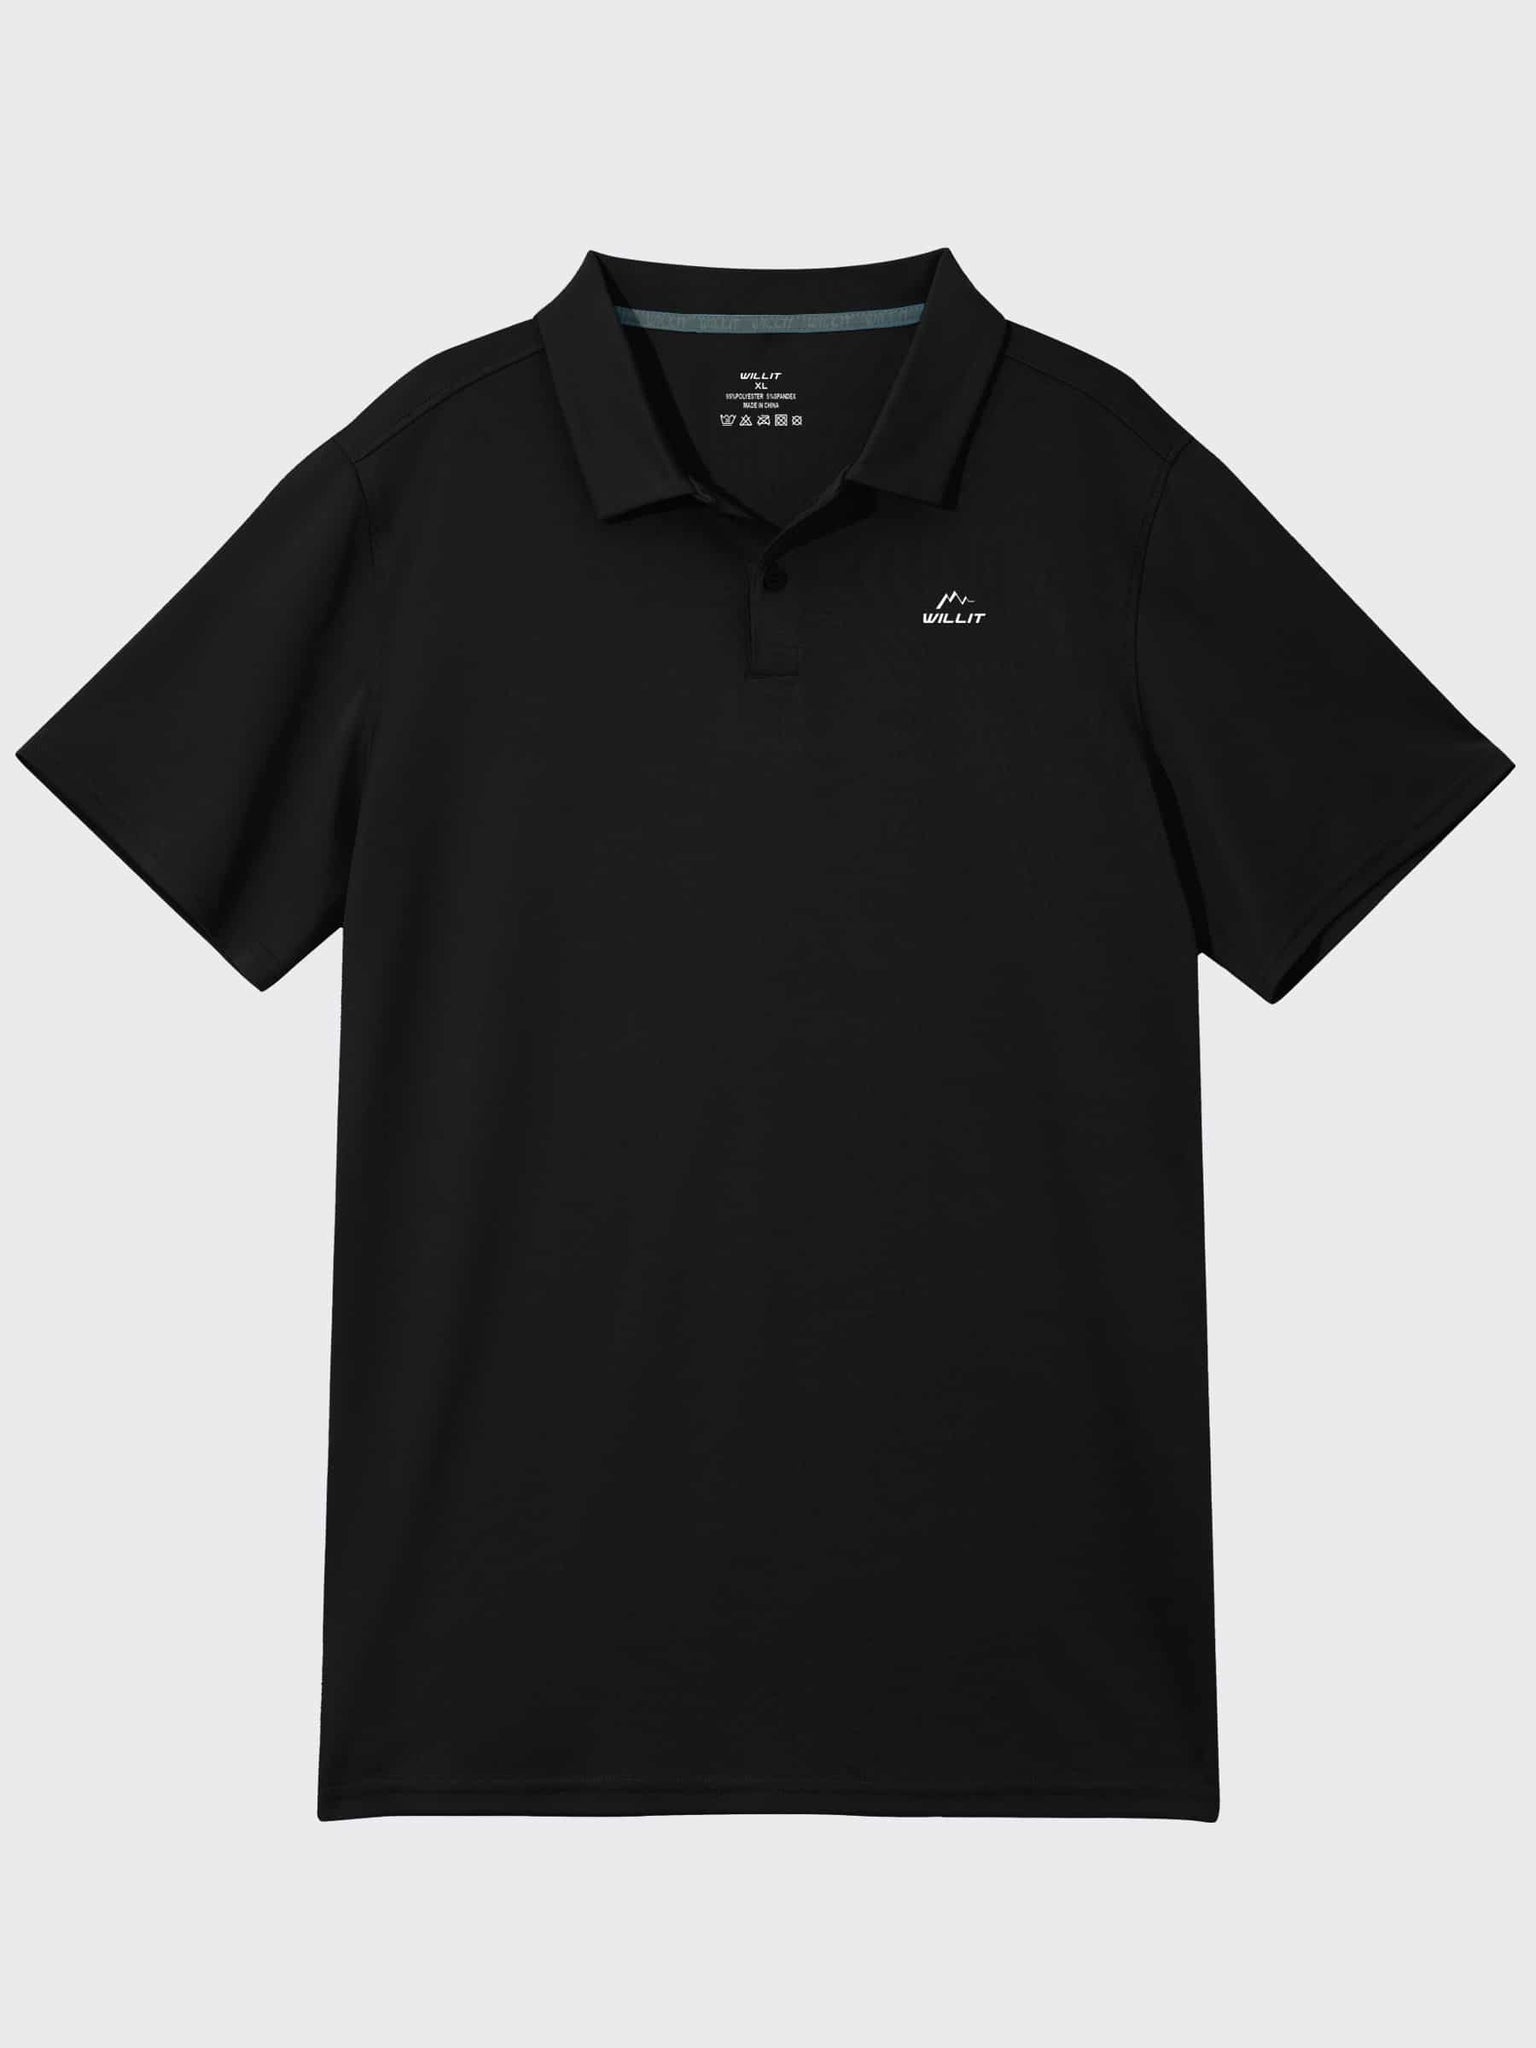 Youth Golf Polo Sun Shirts_Black_laydown4